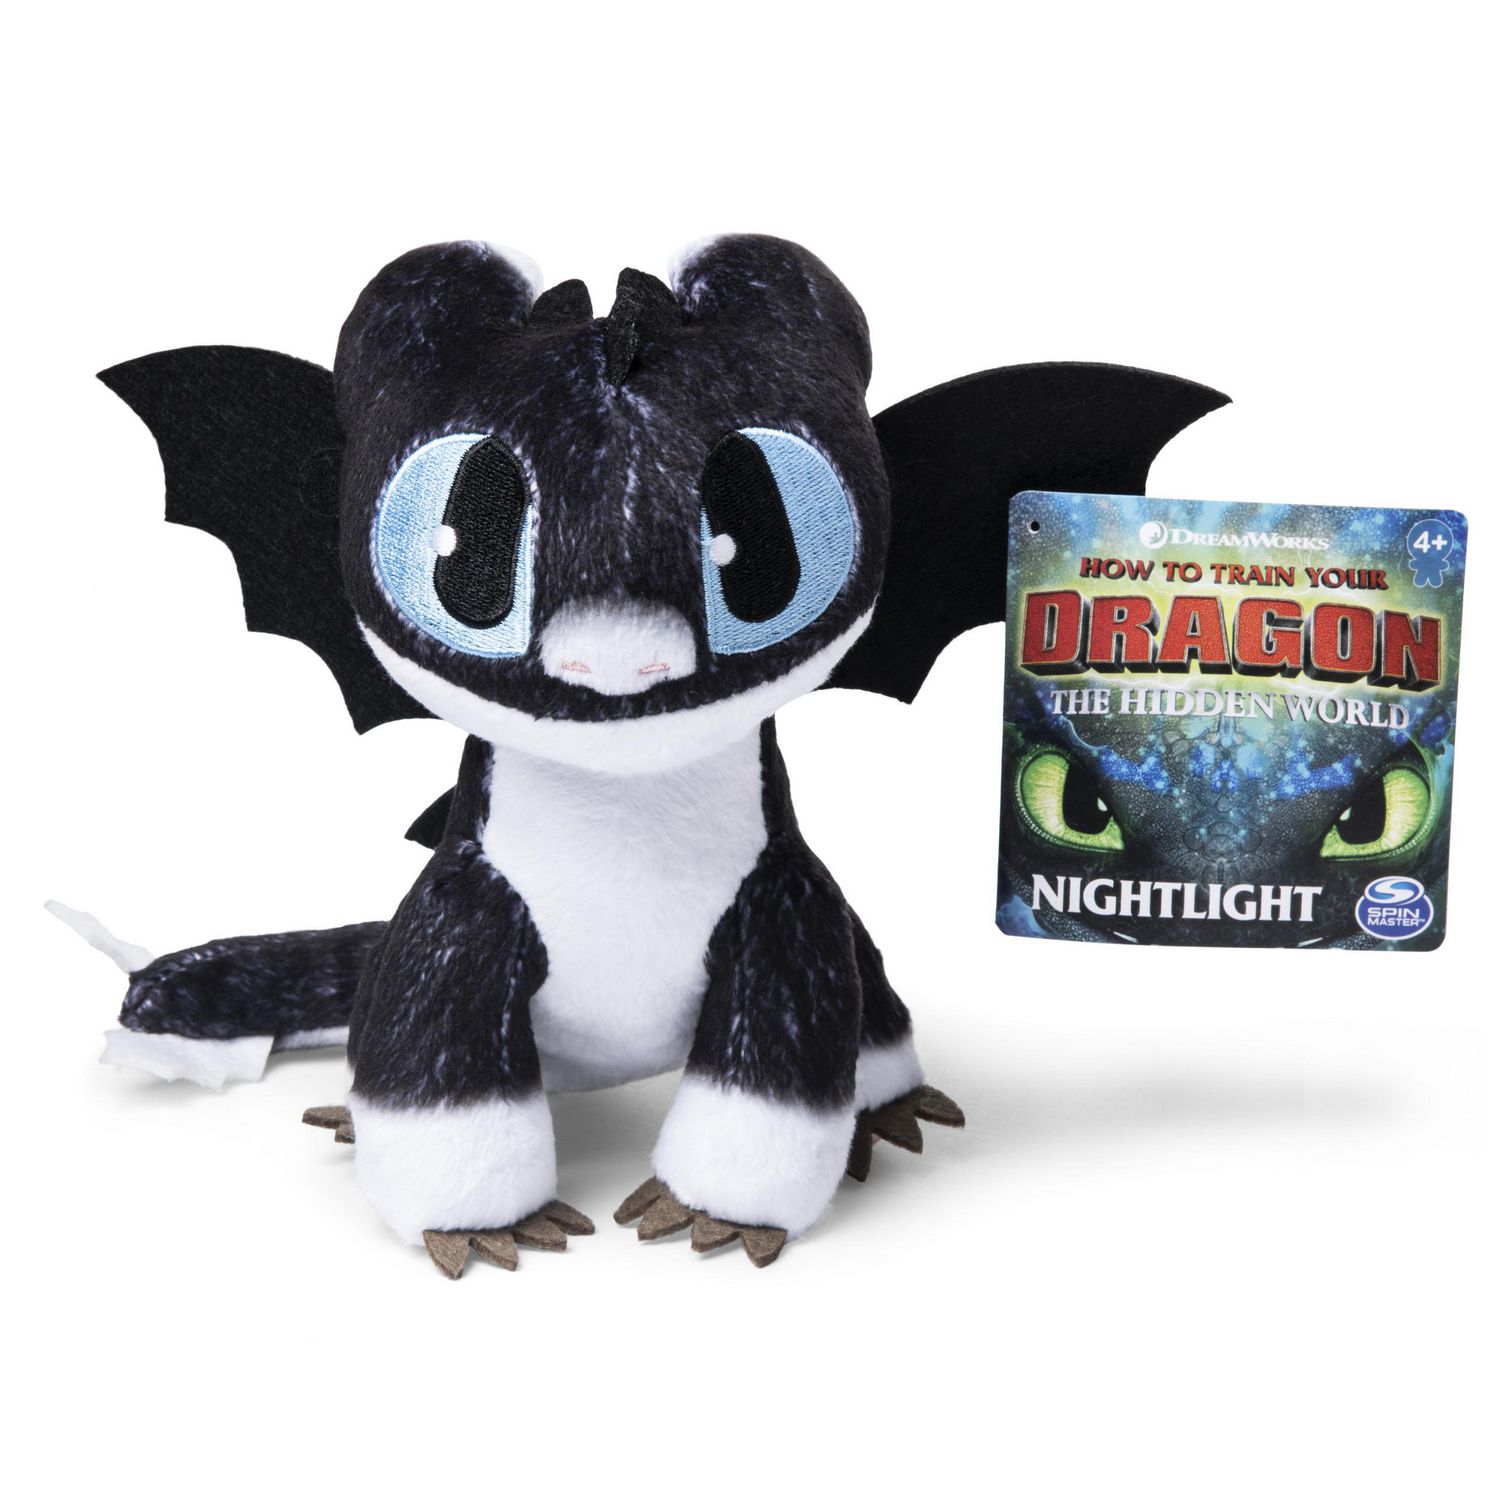 DreamWorks Dragons, Nightlight 8-inch Premium Plush Dragon, for Kids ...